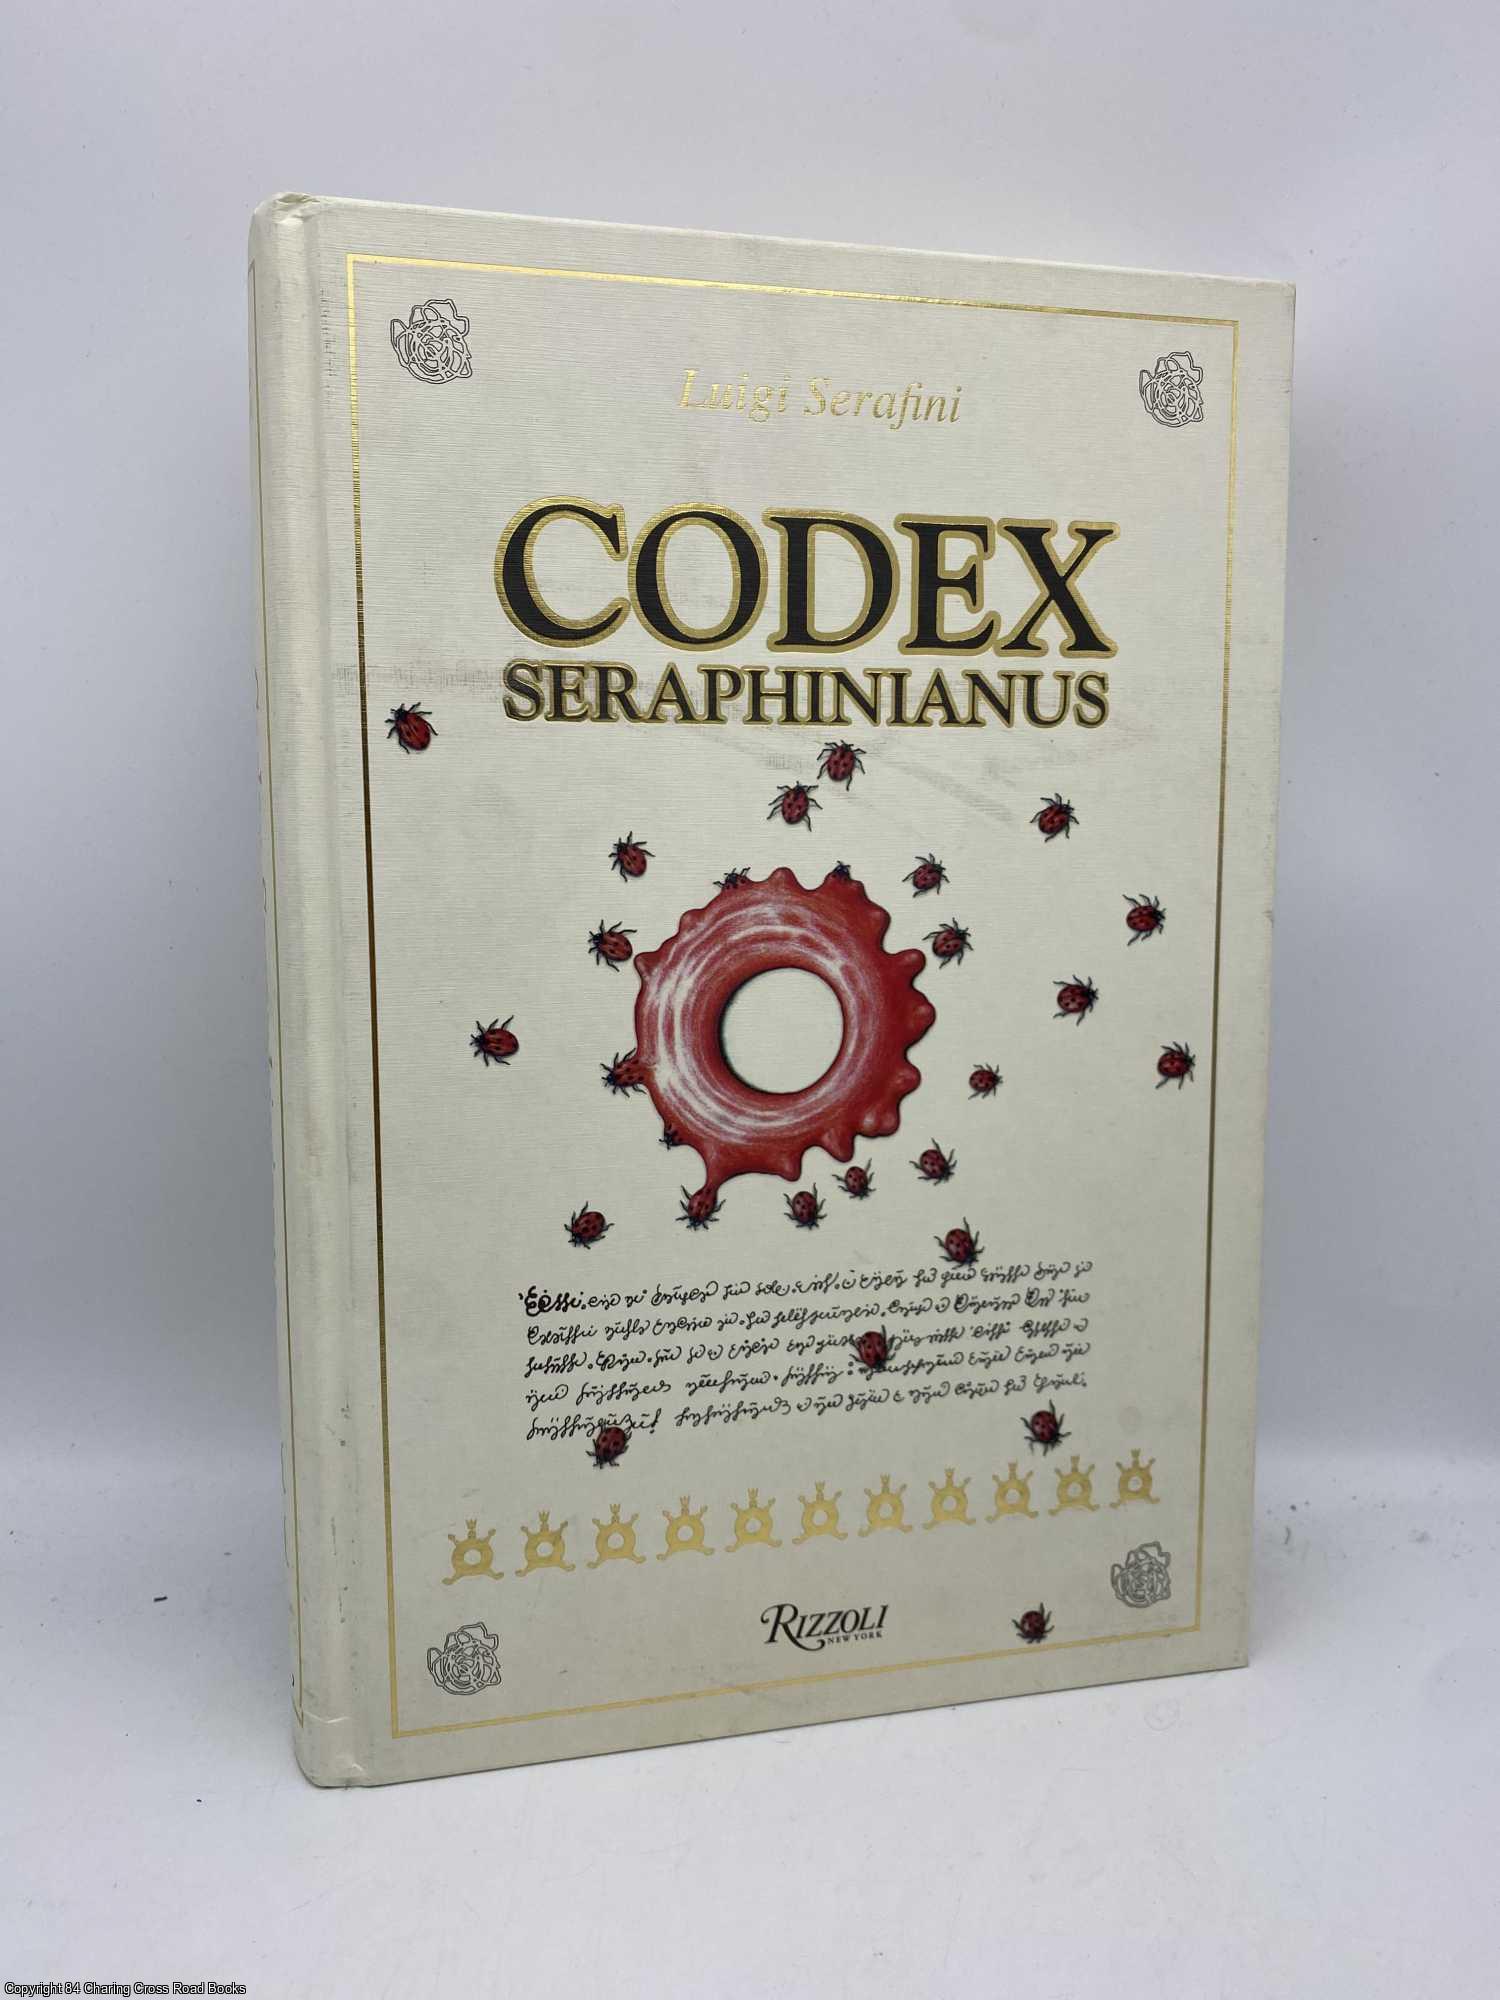 Codex Seraphinianus by Luigi Serafini on 84 Charing Cross Rare Books